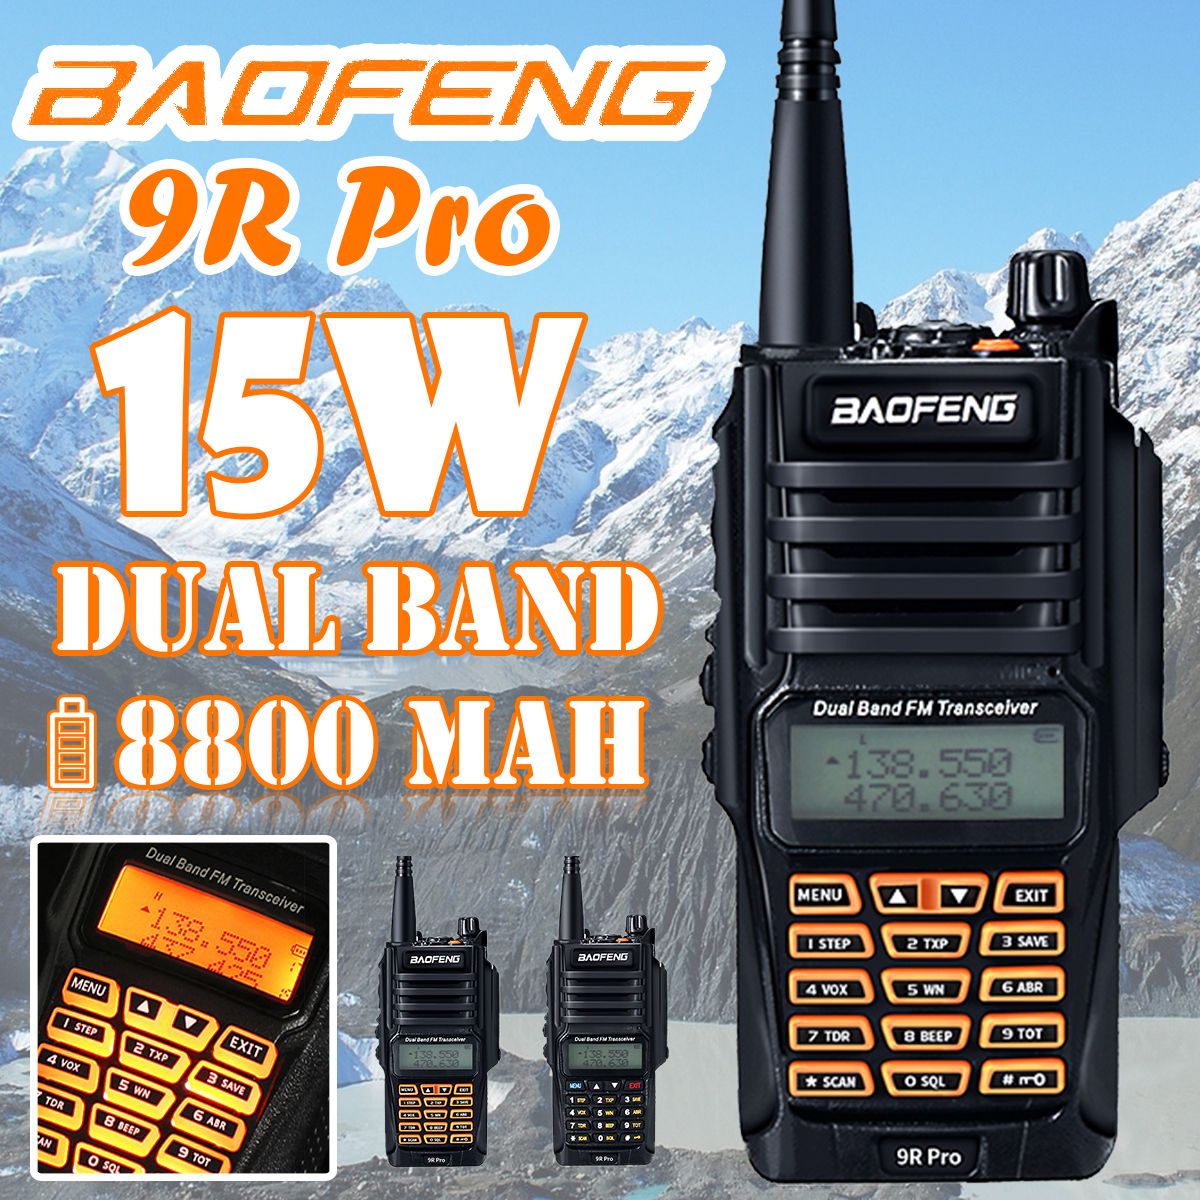 BAOFENG-UV-9R-Pro-15W-8800-mAh-FM-Transceiver-Waterproof-Dual-Band-Handheld-Radio-Walkie-Talkie-1643229